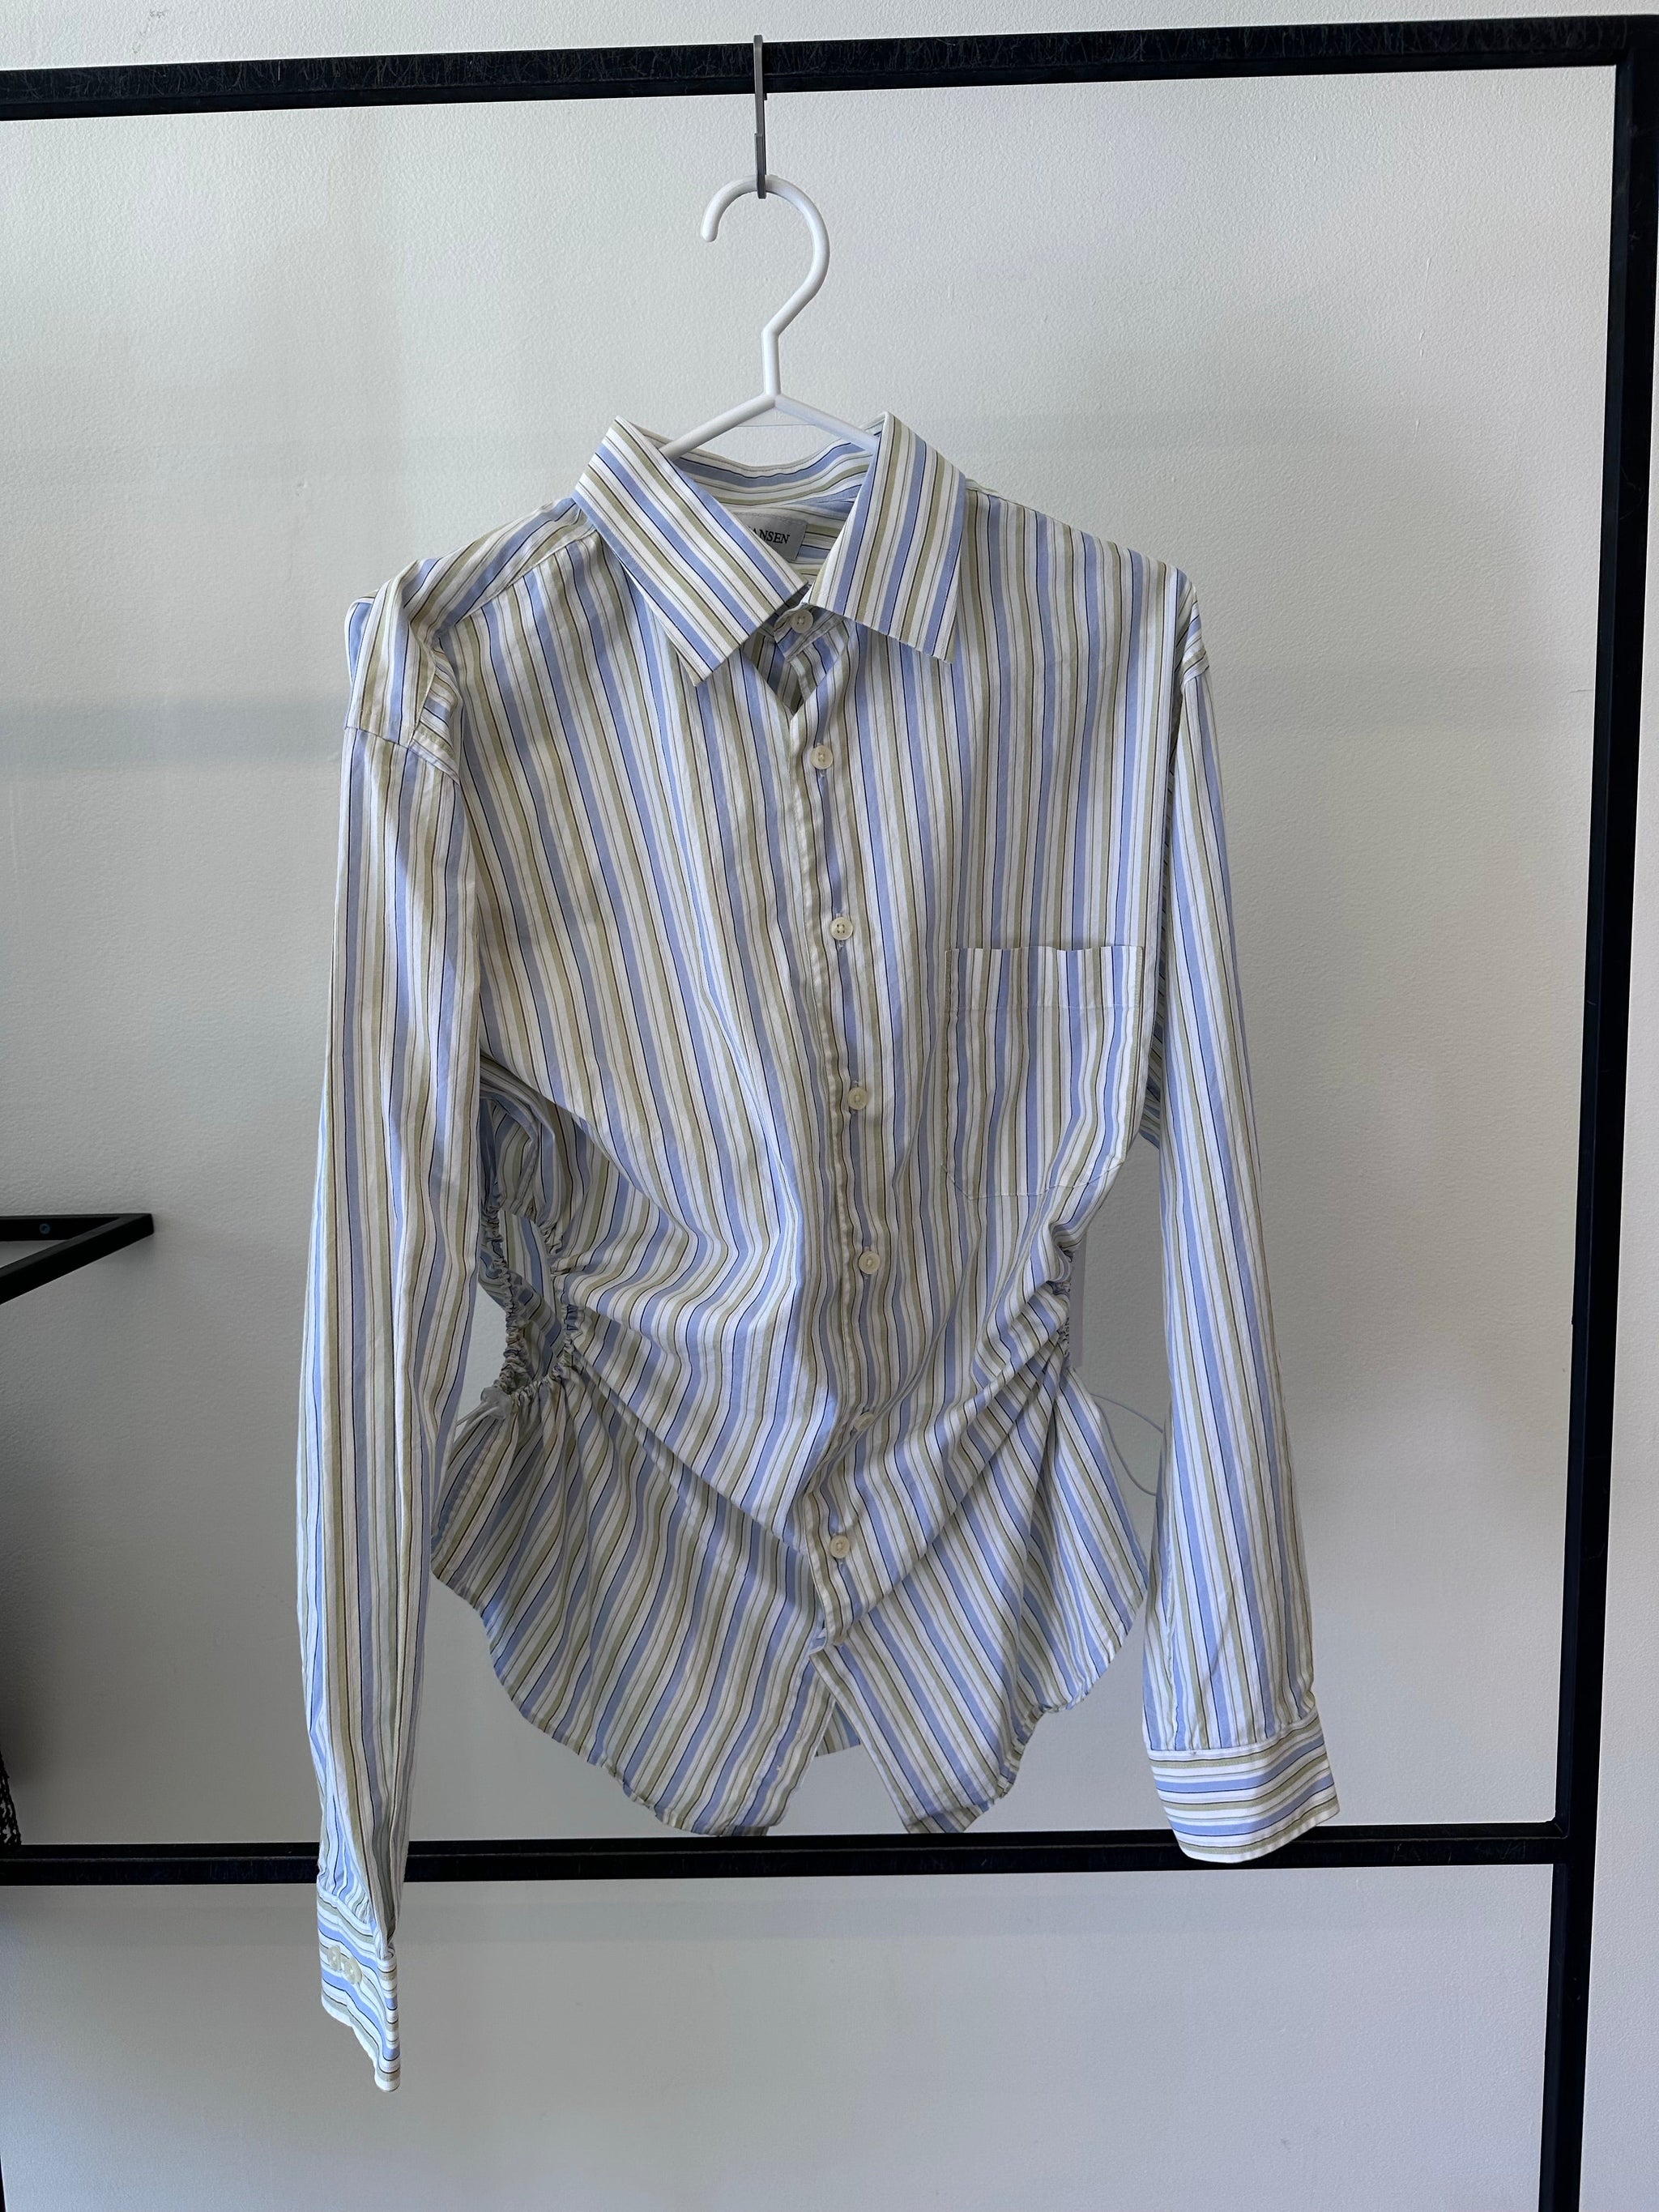 Bungee Shirt - Mixed Stripes